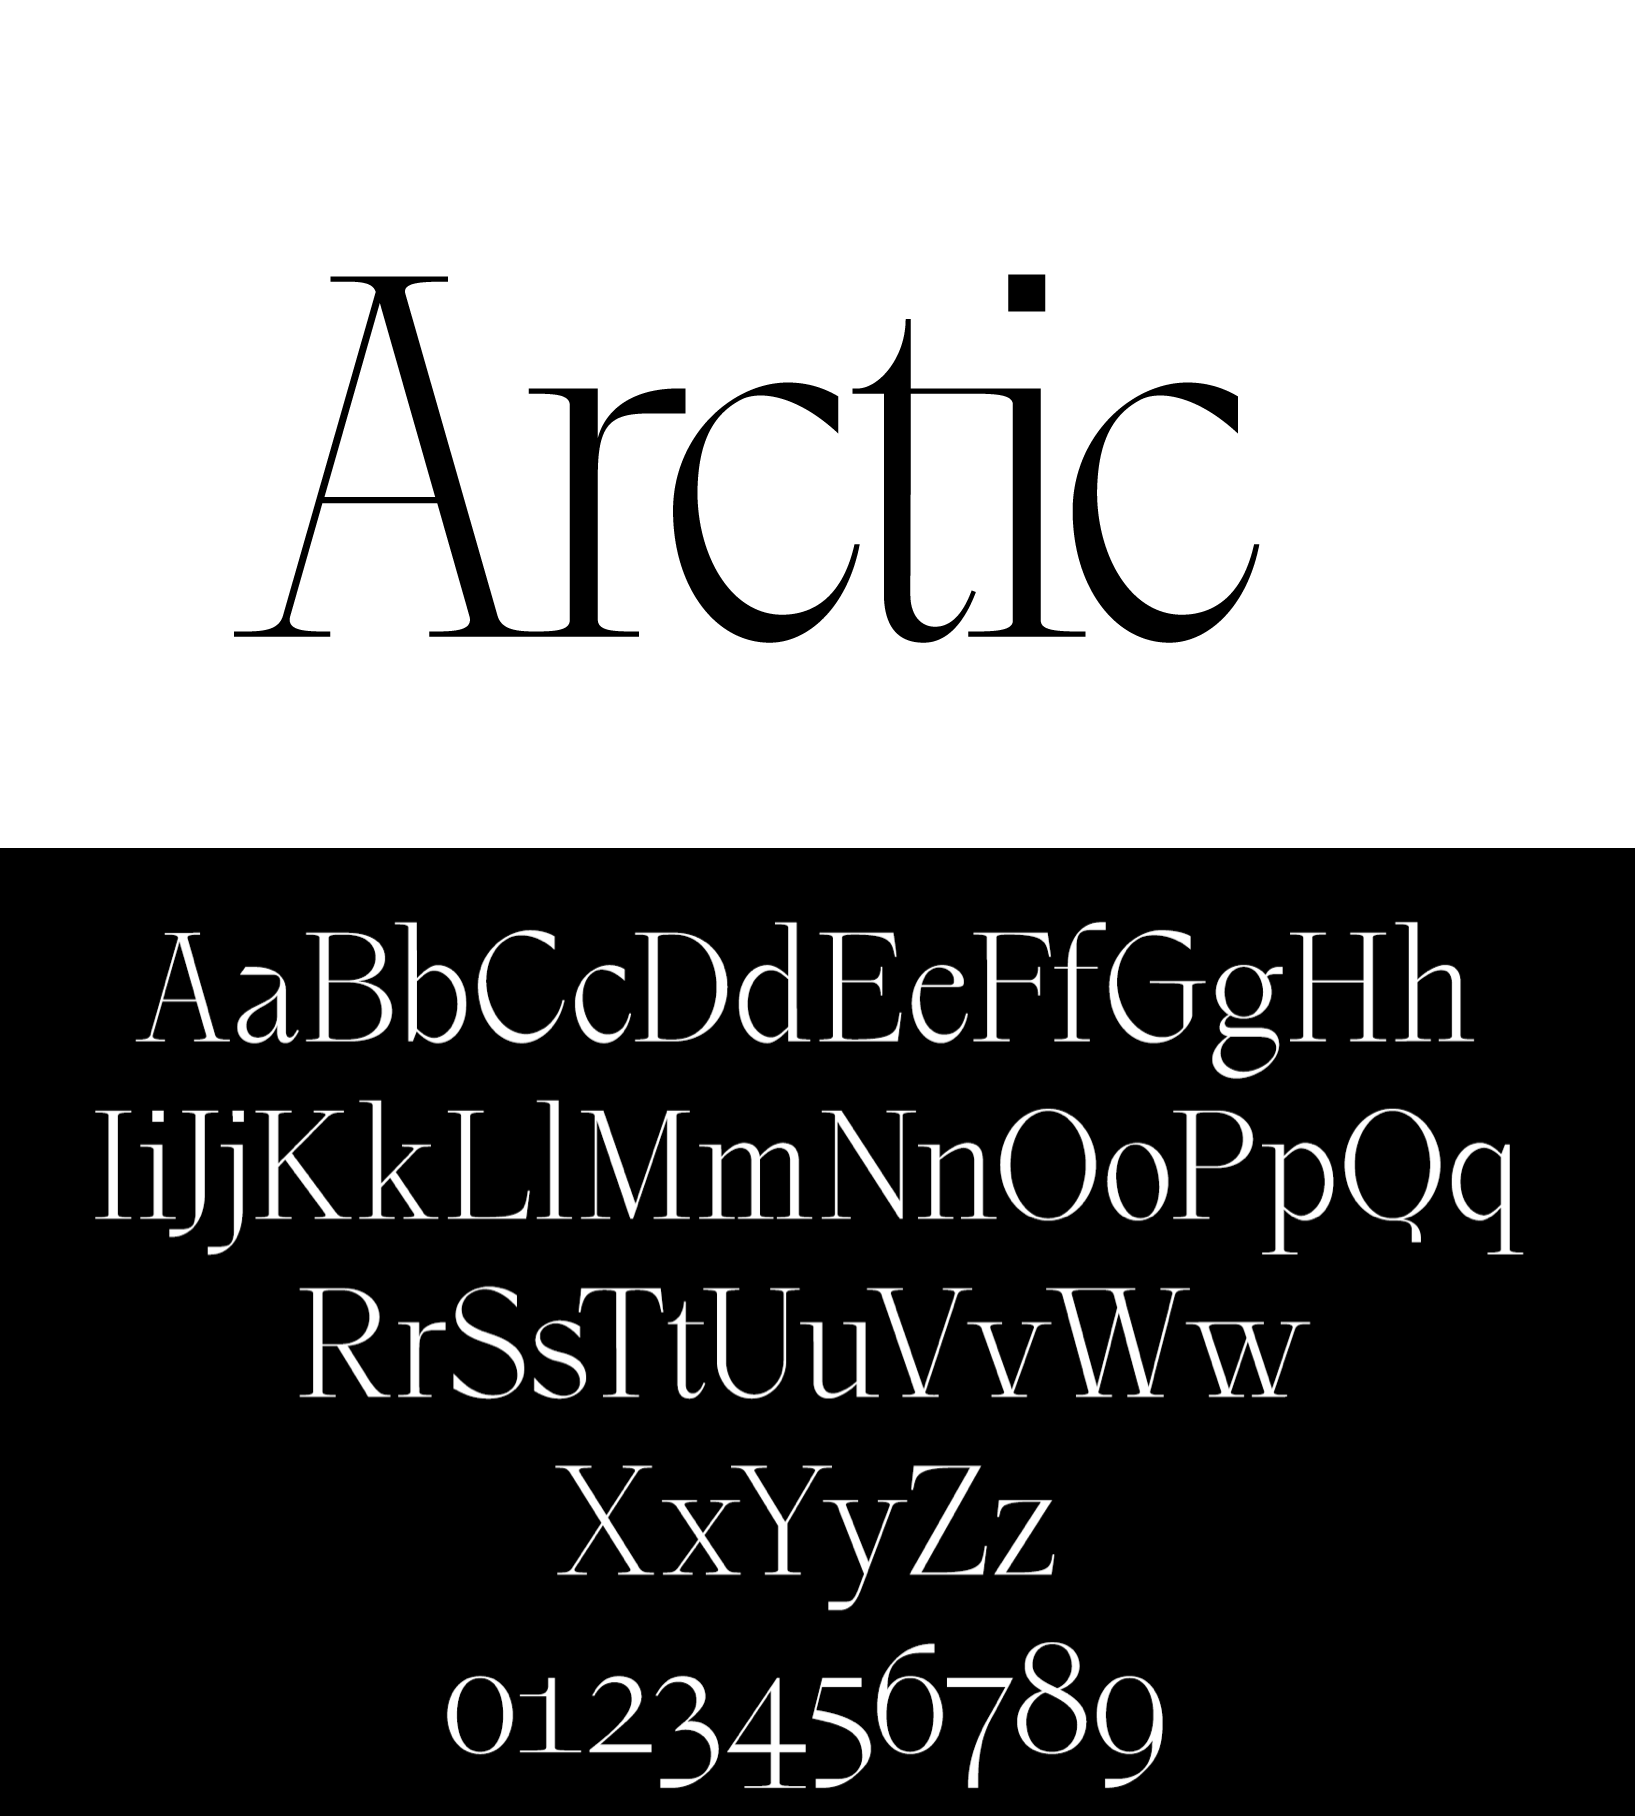 Ejemplo de fuente BL Arctic